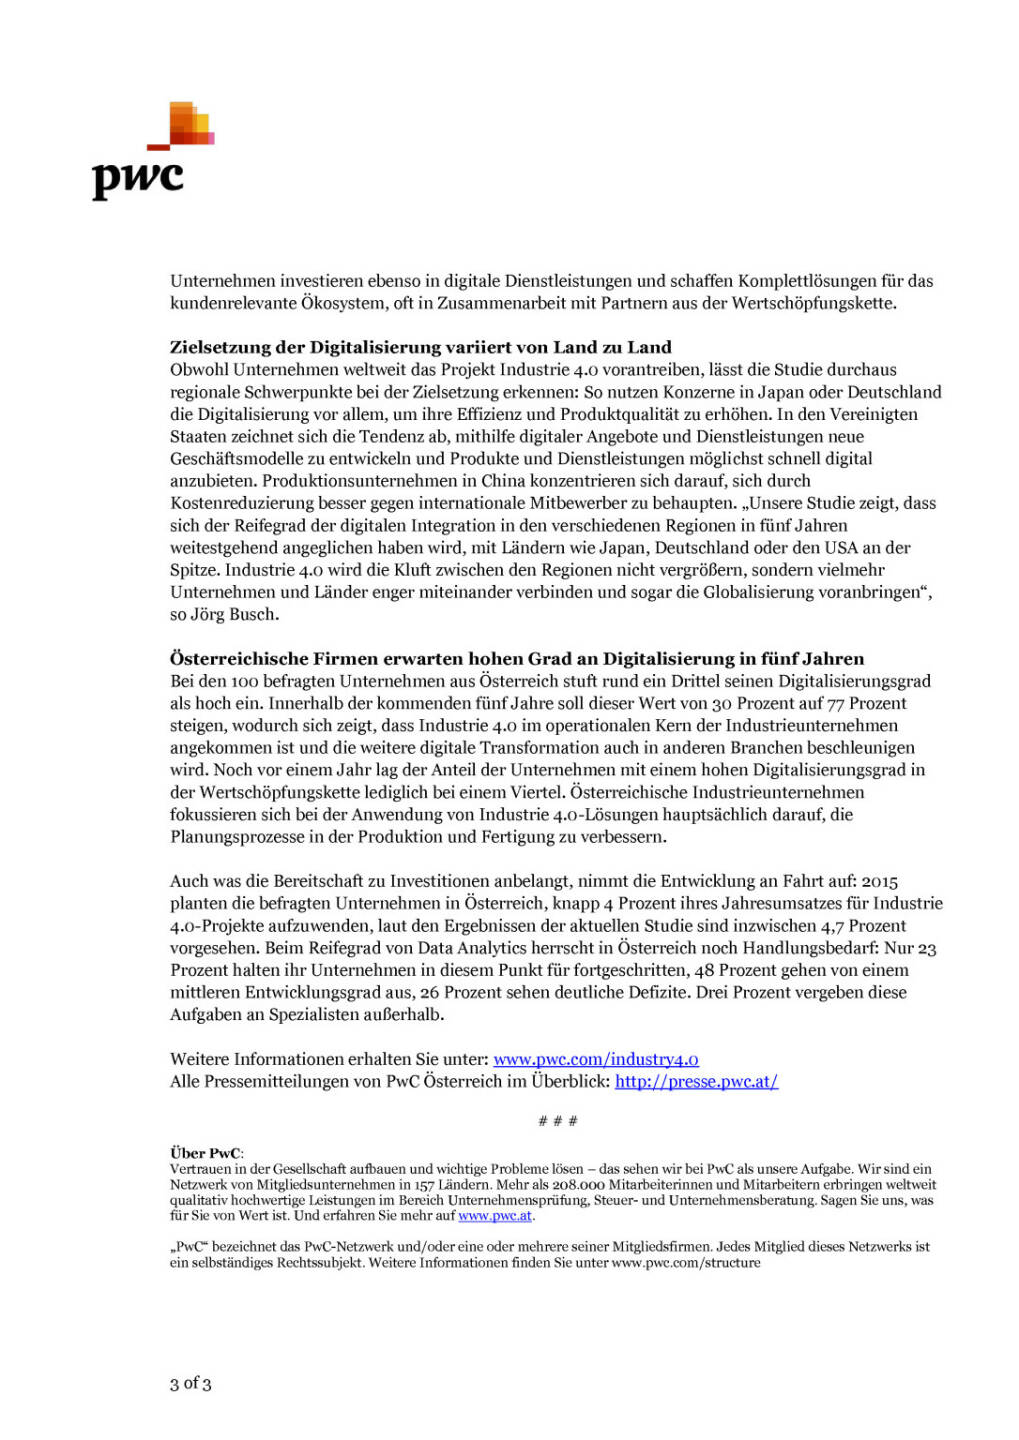 PwC Österreich: Studie Industrie 4.0, Seite 3/3, komplettes Dokument unter http://boerse-social.com/static/uploads/file_879_pwc_osterreich_studie_industrie_40.pdf